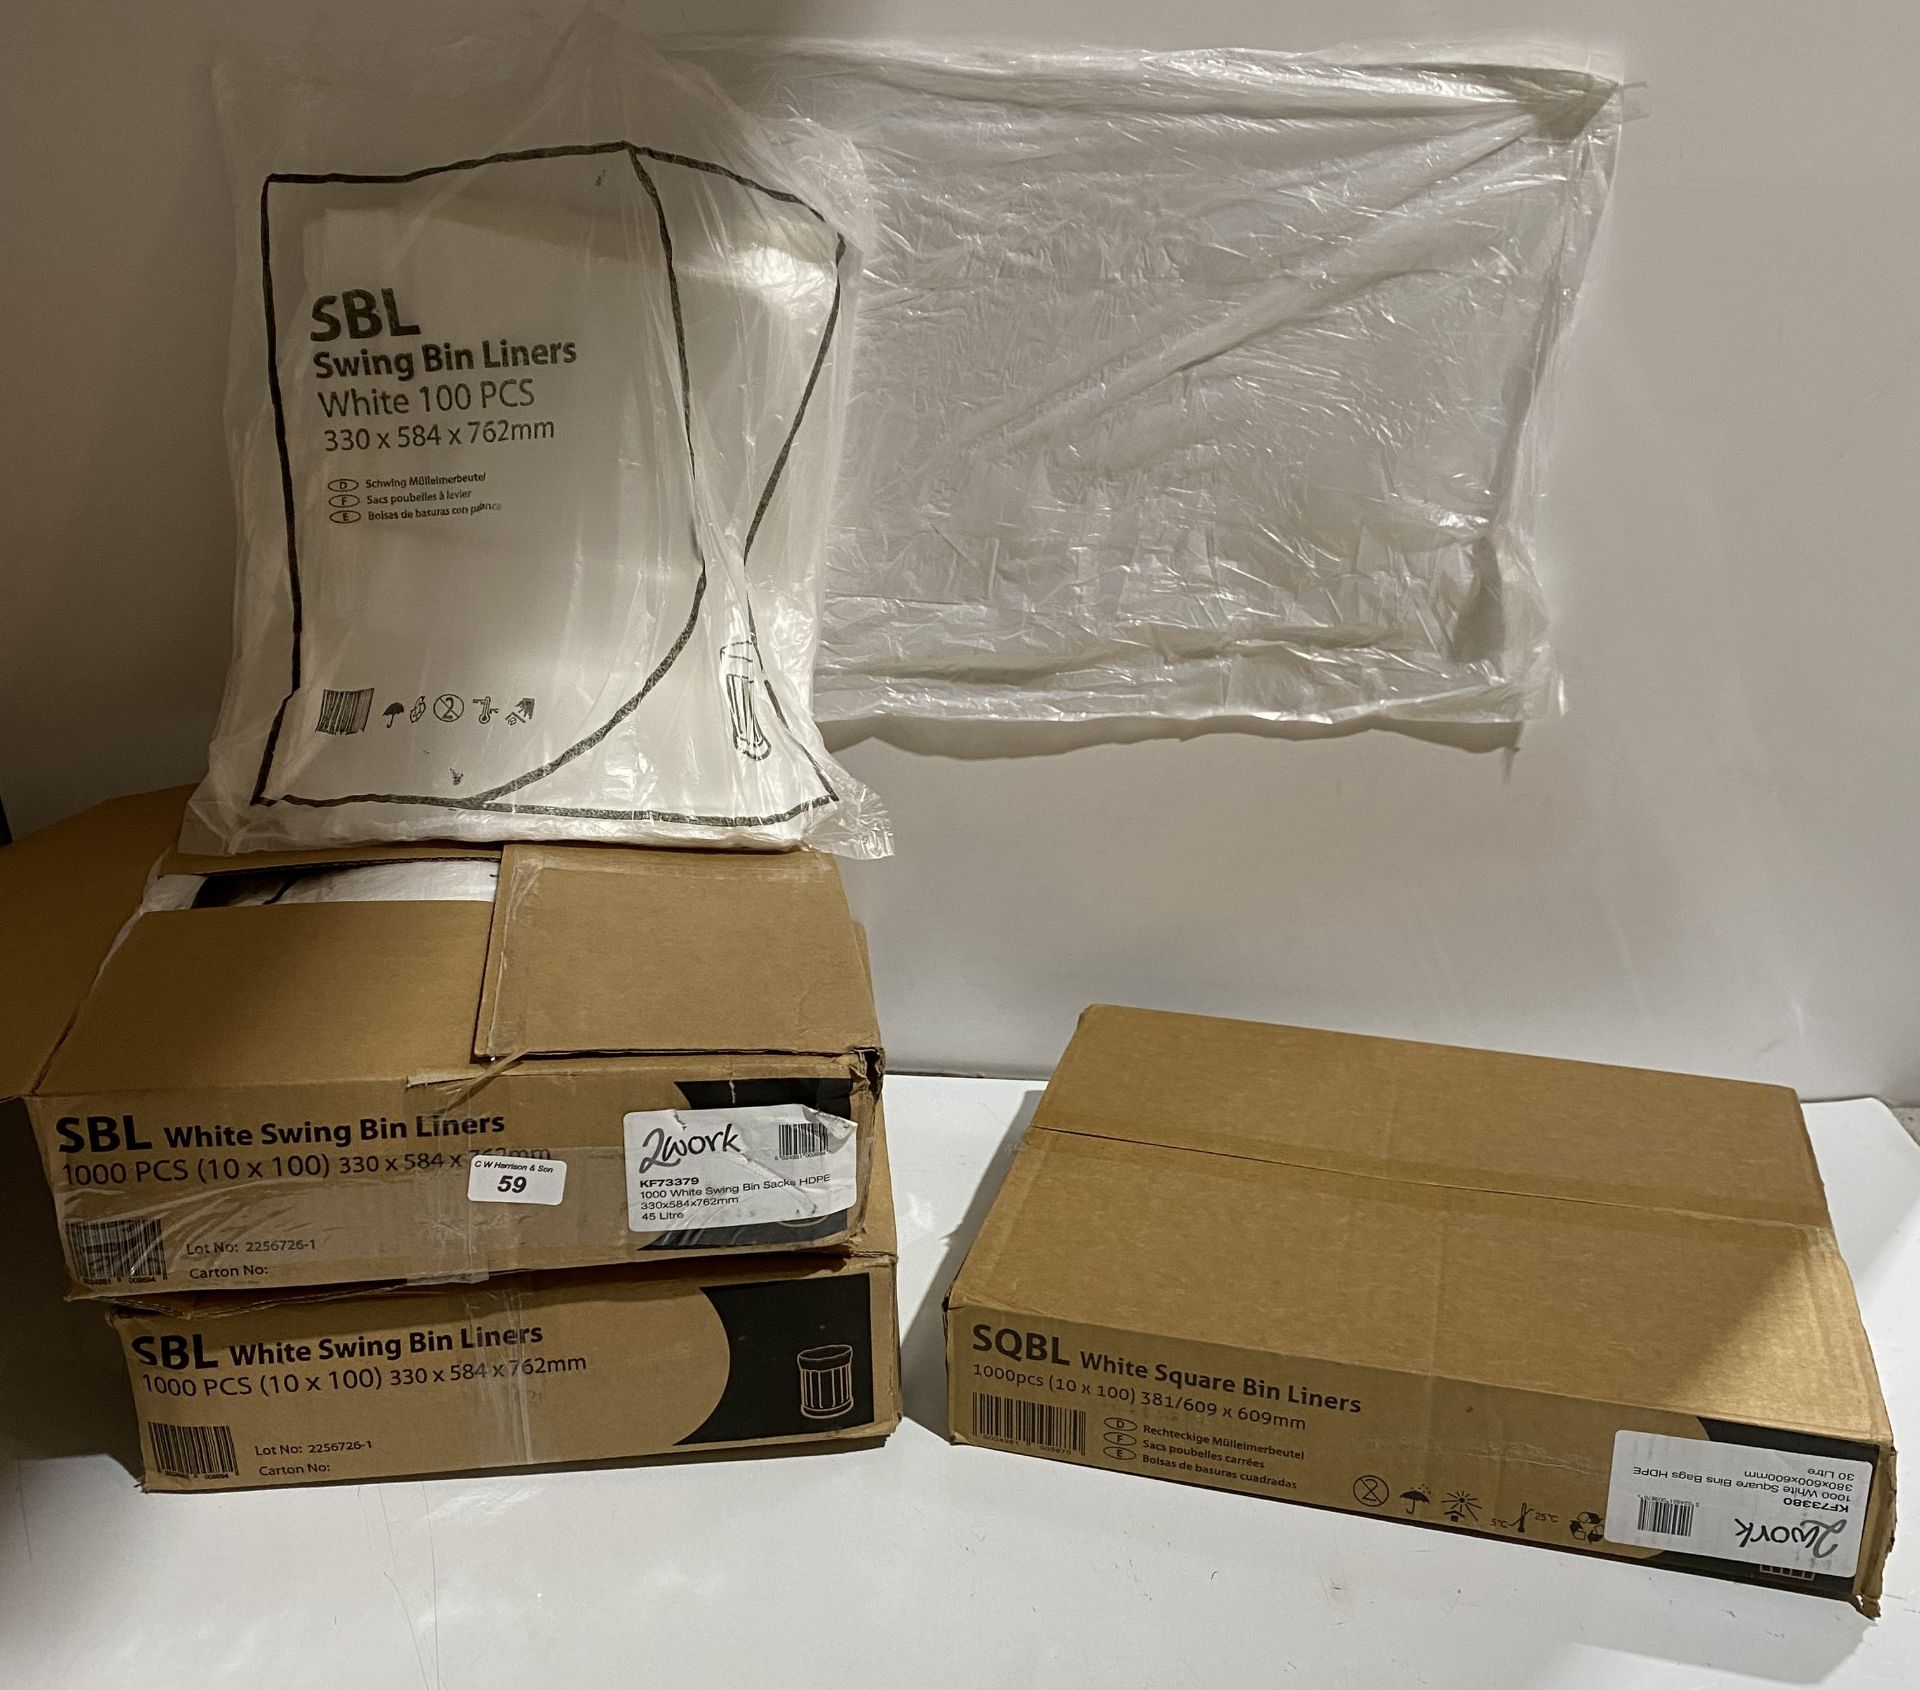 2 x boxes of 1000 white swing bin liners 330x584x762mm 45L, 1 x box of 900 white bin liners 30L.